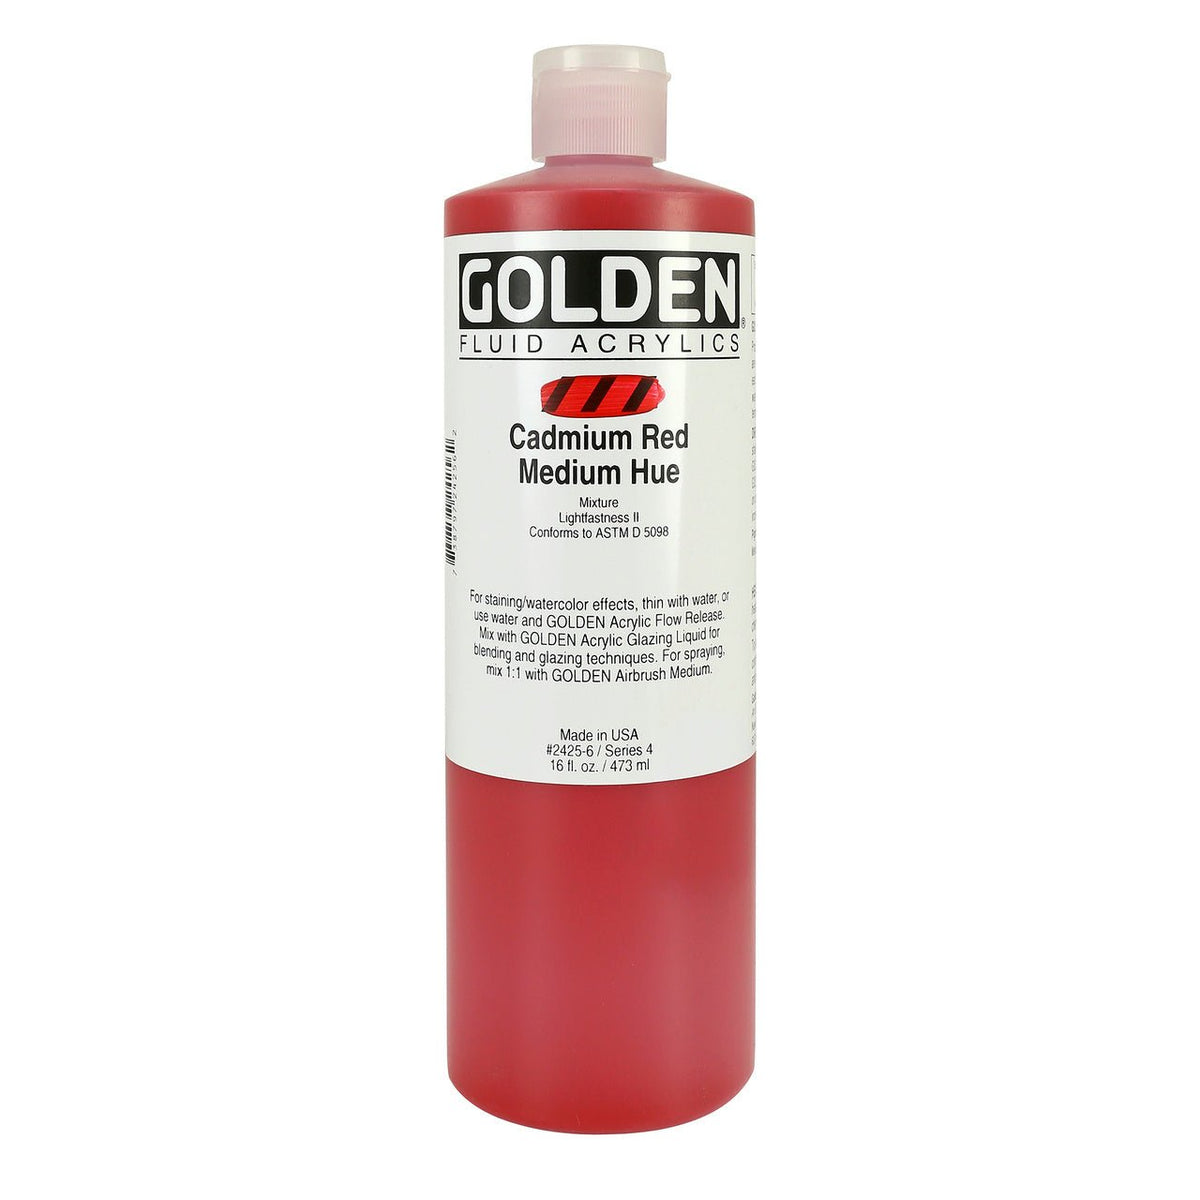 Golden Fluid Acrylic Cadmium Red Medium Hue 16 oz - merriartist.com